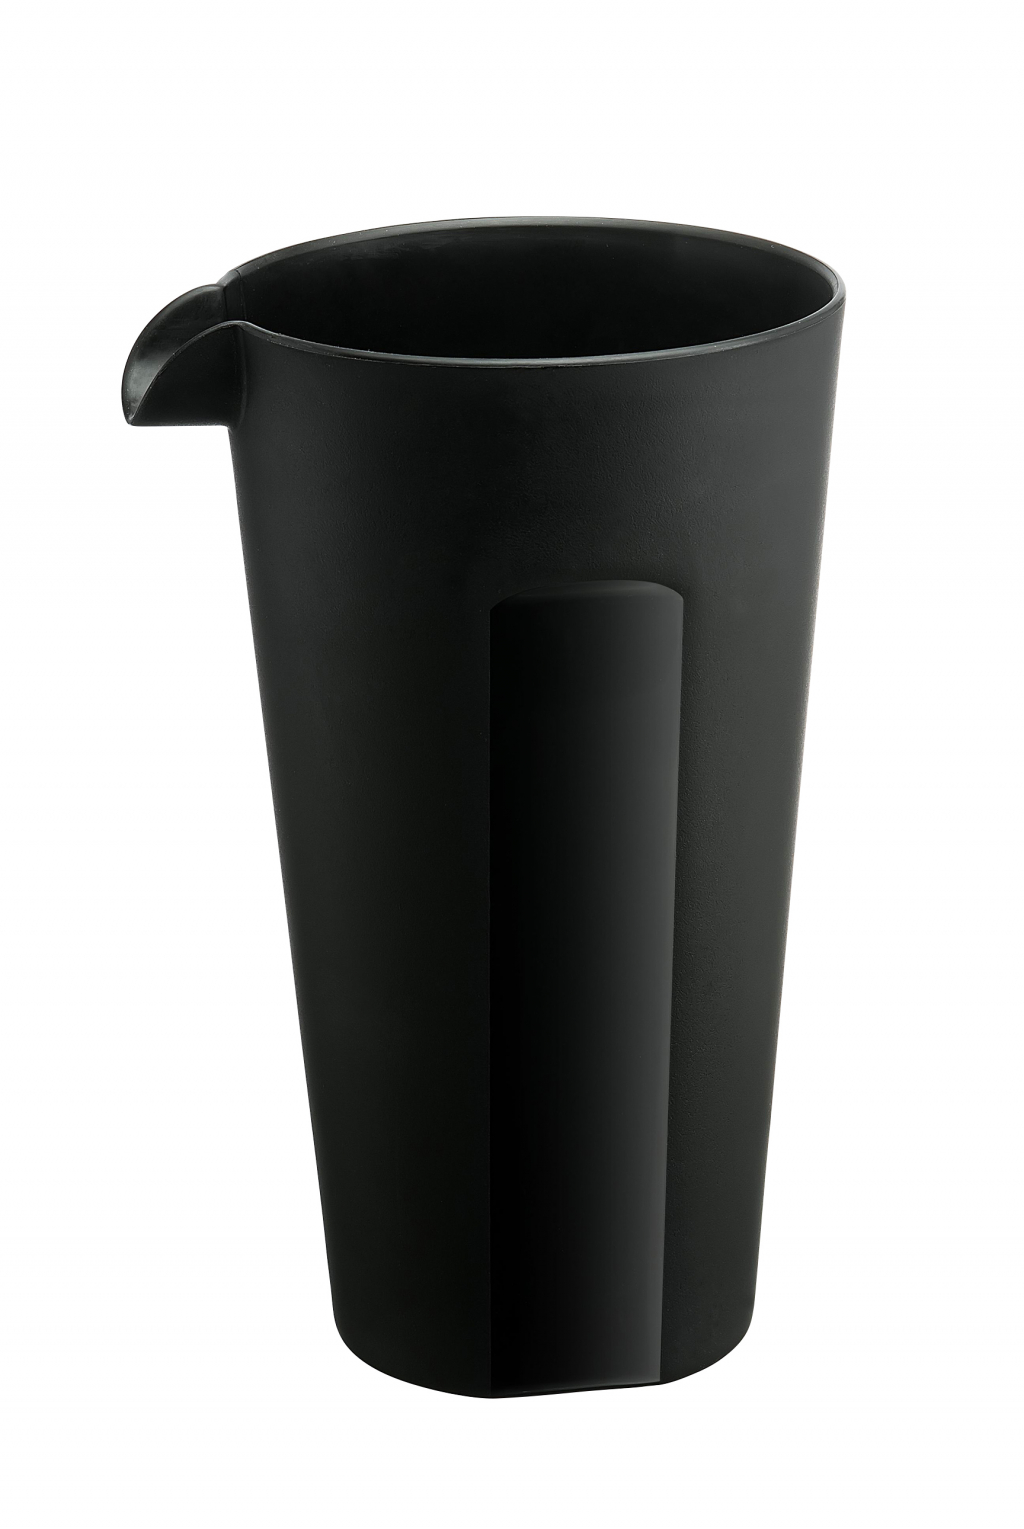 glassforever pitcher - 1ltr - black